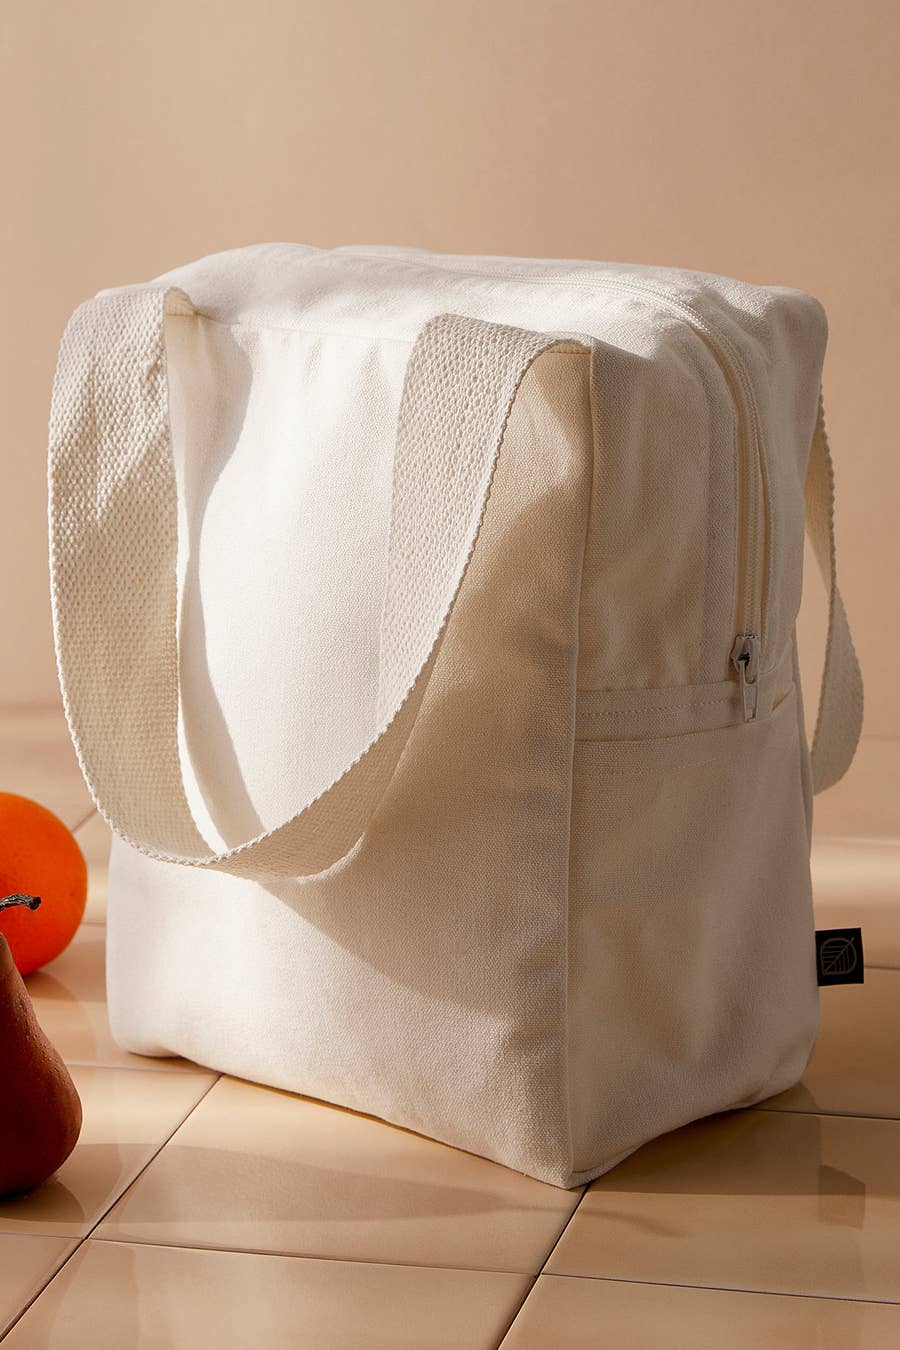 Aesthetic' Lunch Bag